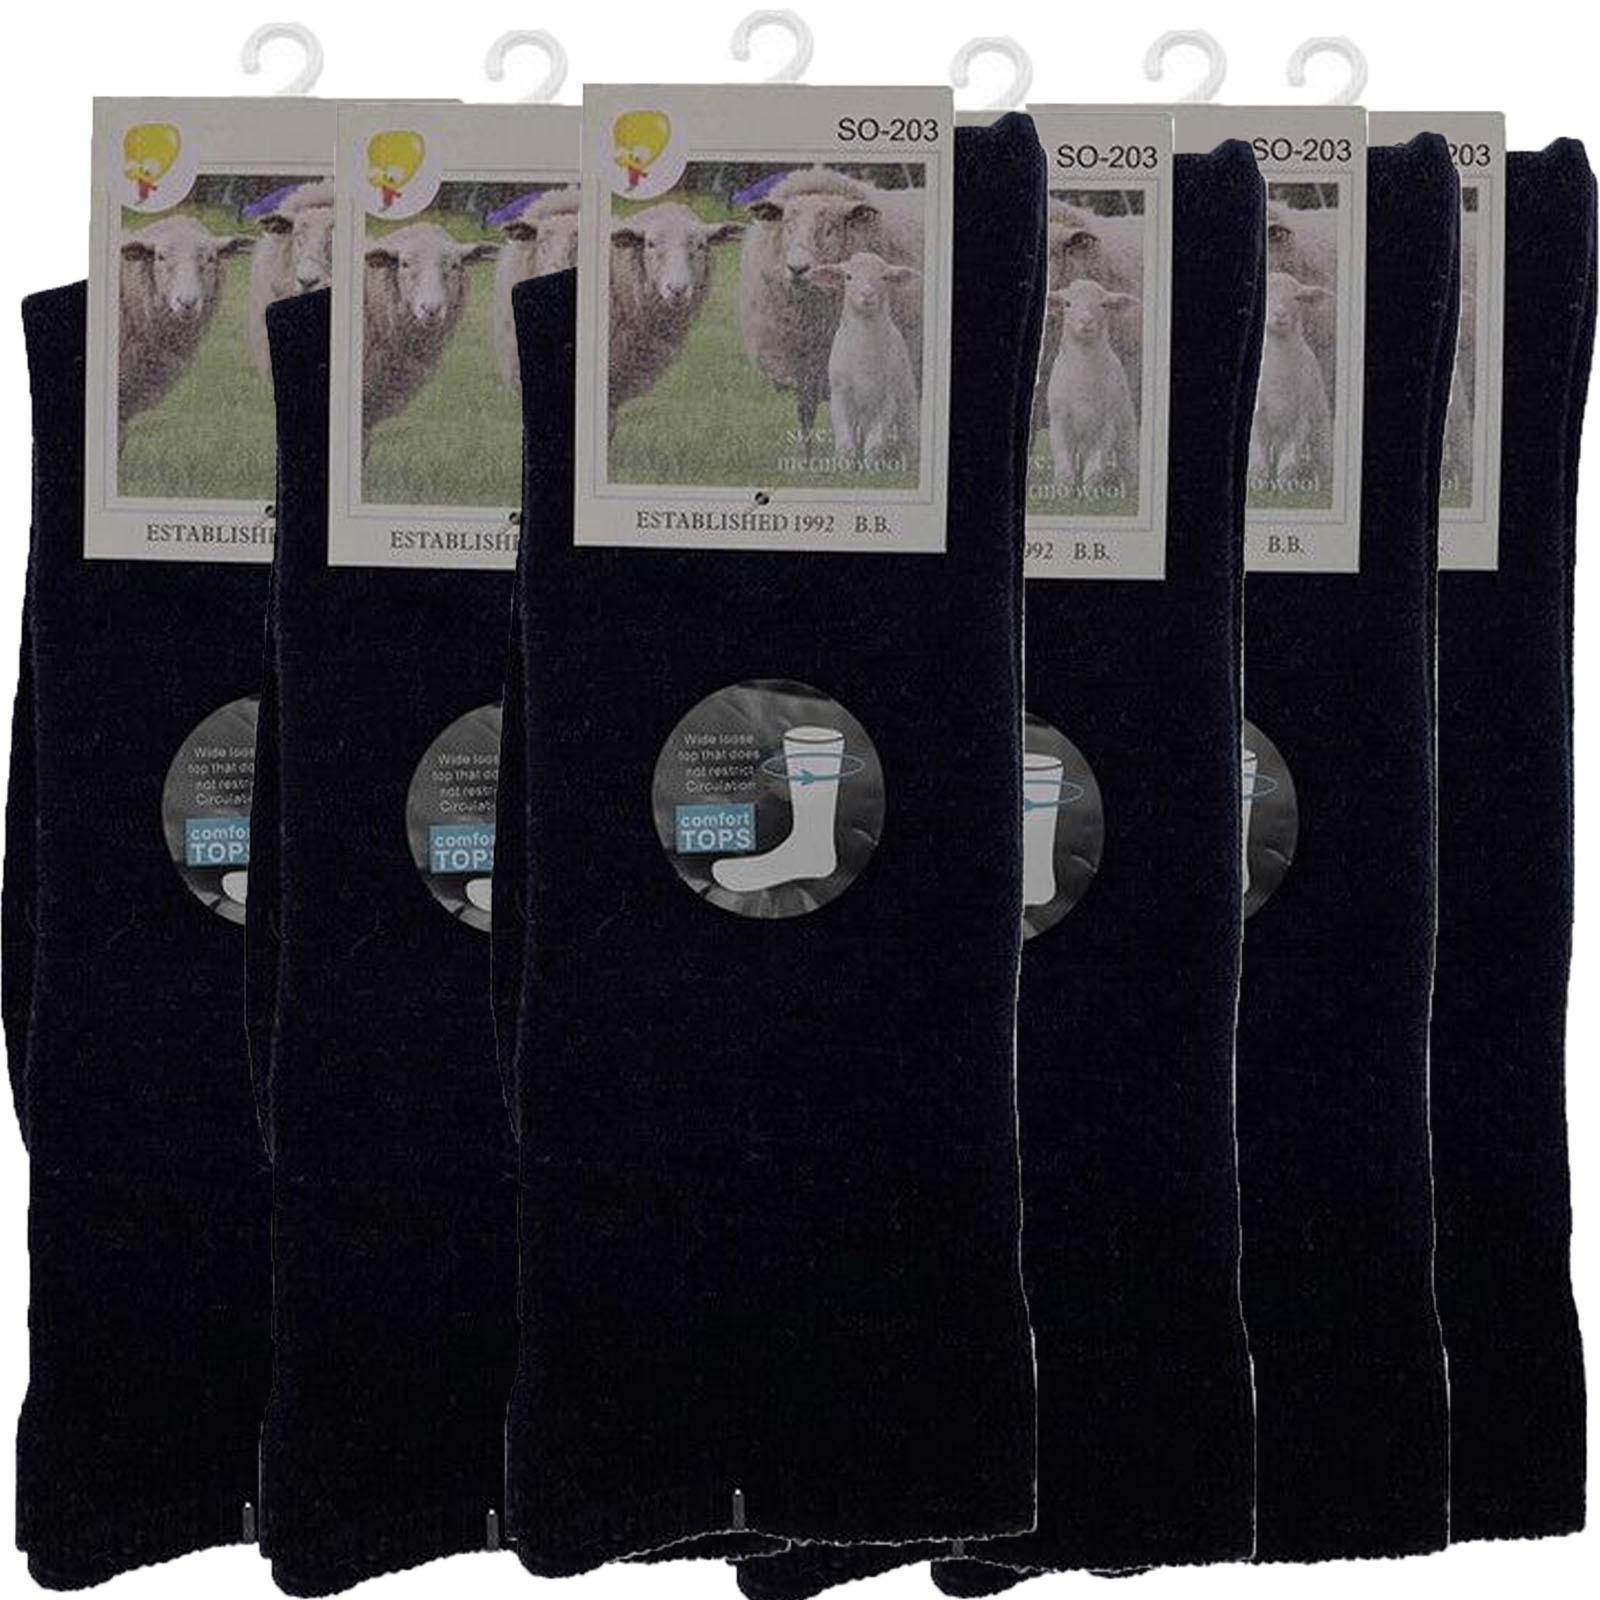 Merino Wool Mens Loose Top Thermal Socks Diabetic Comfort Circulation - 6 Pairs - Navy - 2-8